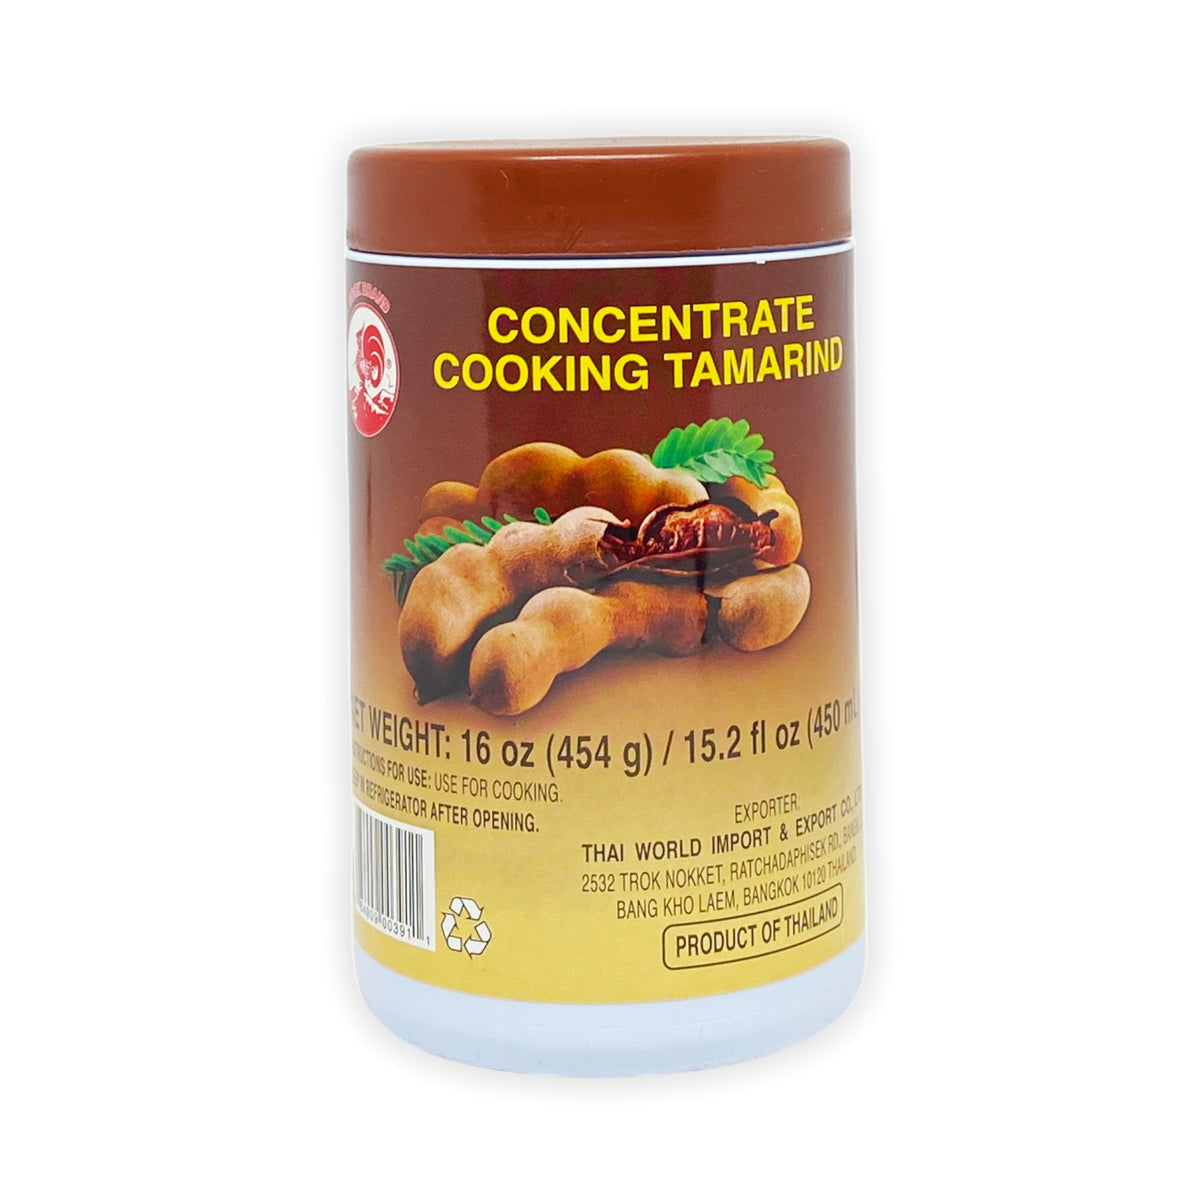 Pâte de Tamarin: Bahadourian, Pâte de Tamarin Paquet 150g - Cock Brand,  Cuisines des Continents